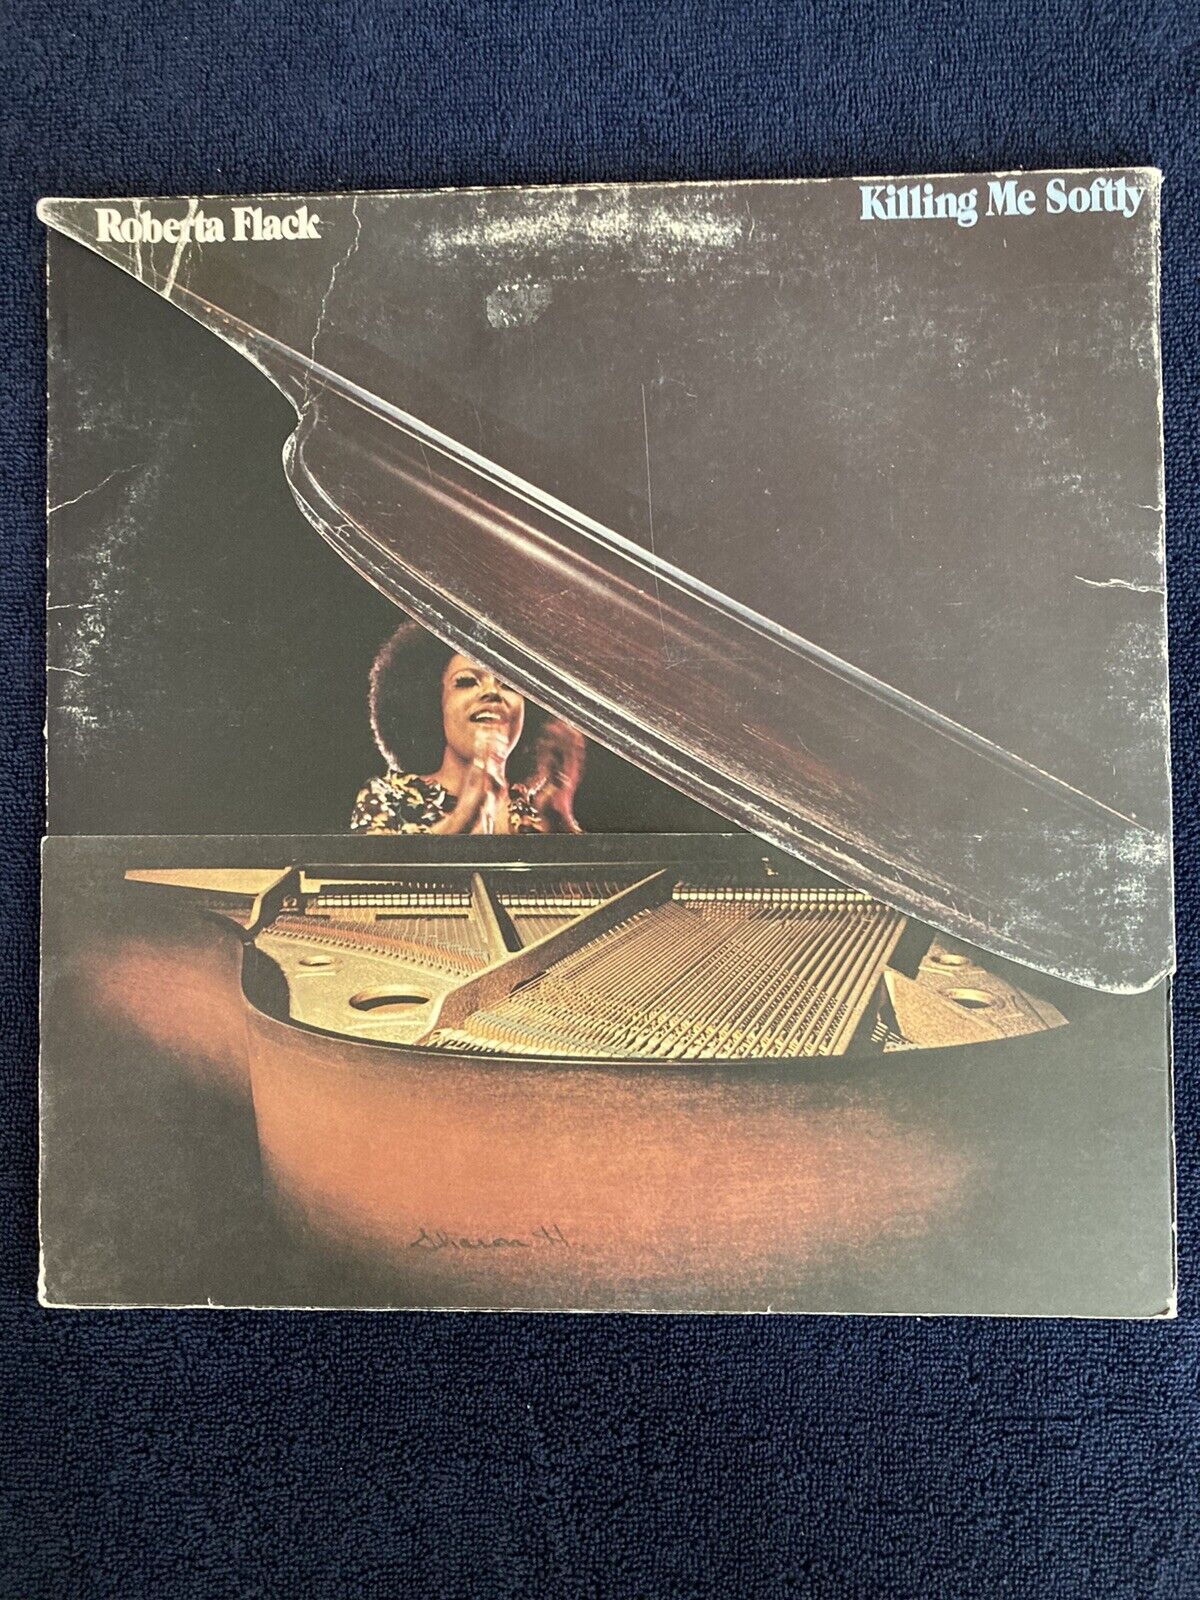 ROBERTA FLACK~ Killing Me Softly. 1973 Vinyl LP.  Vg+ Clean Player  Quick Ship